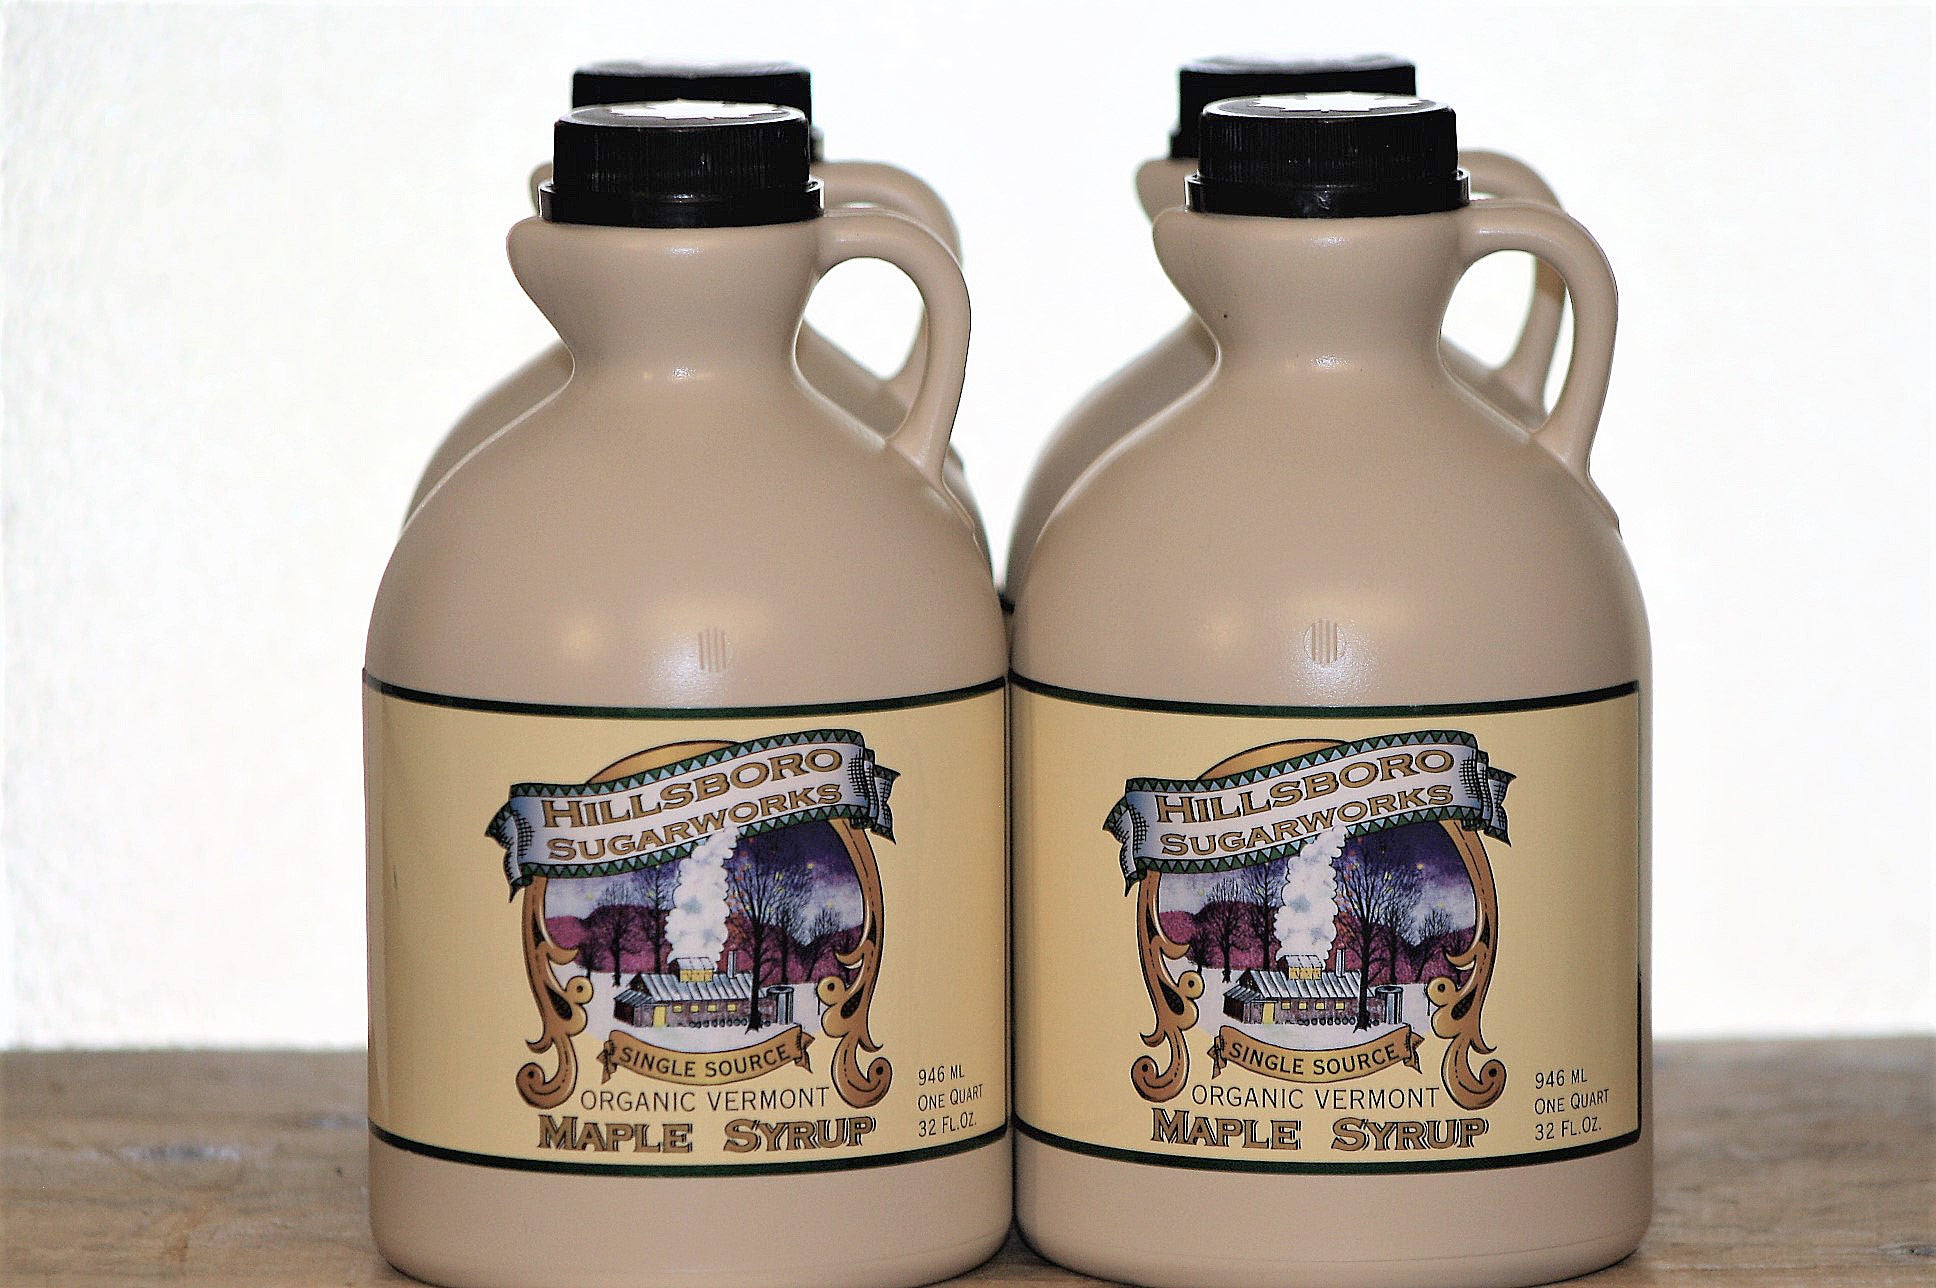 Hillsboro Sugarworks quart Vermont maple syrup 